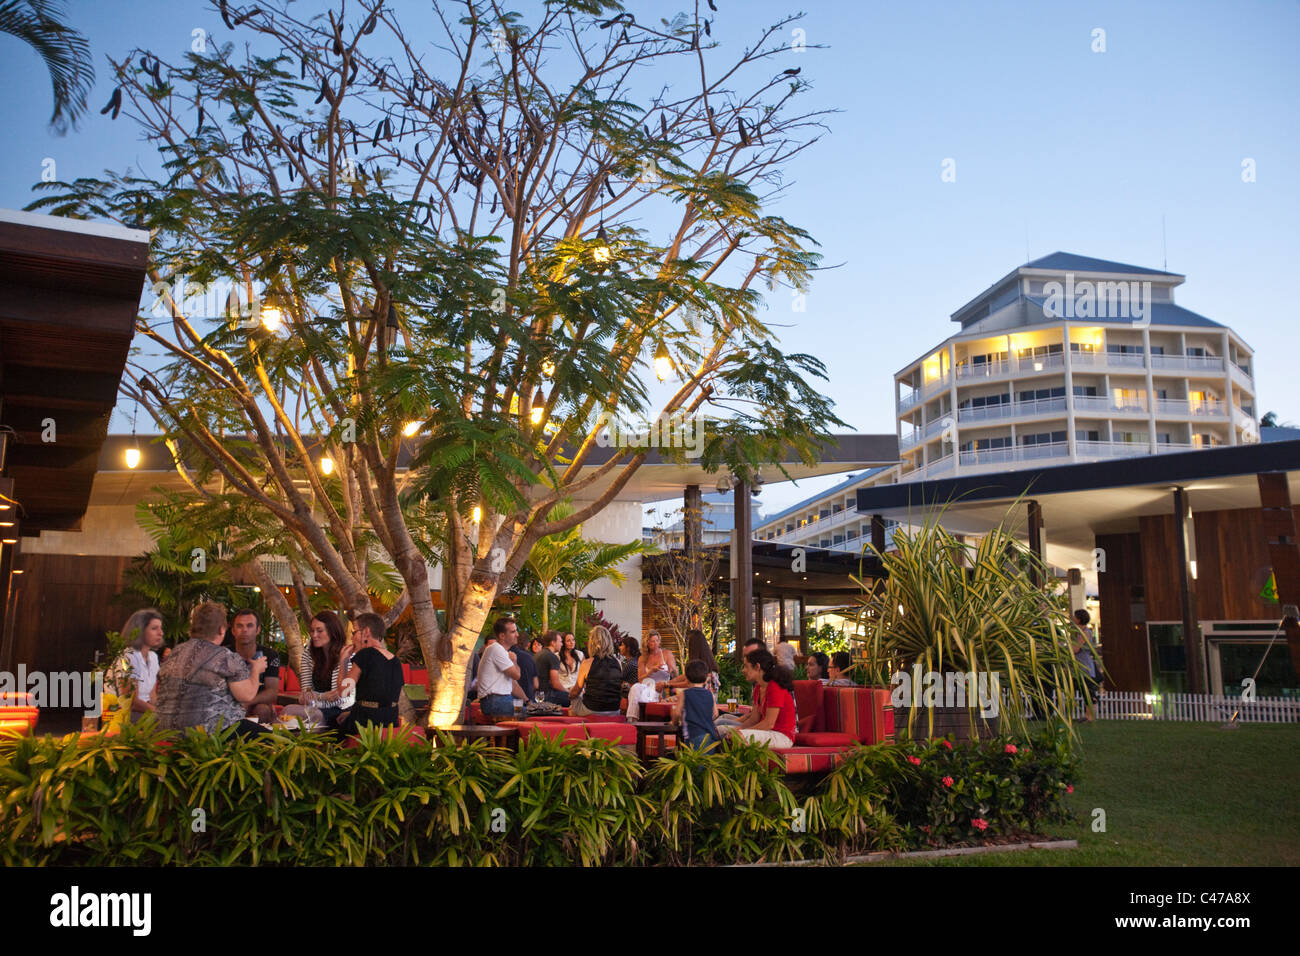 Salt House Restaurant and Bar at dusk. Marina Point, Cairns, Queensland, Australia Stock Photo